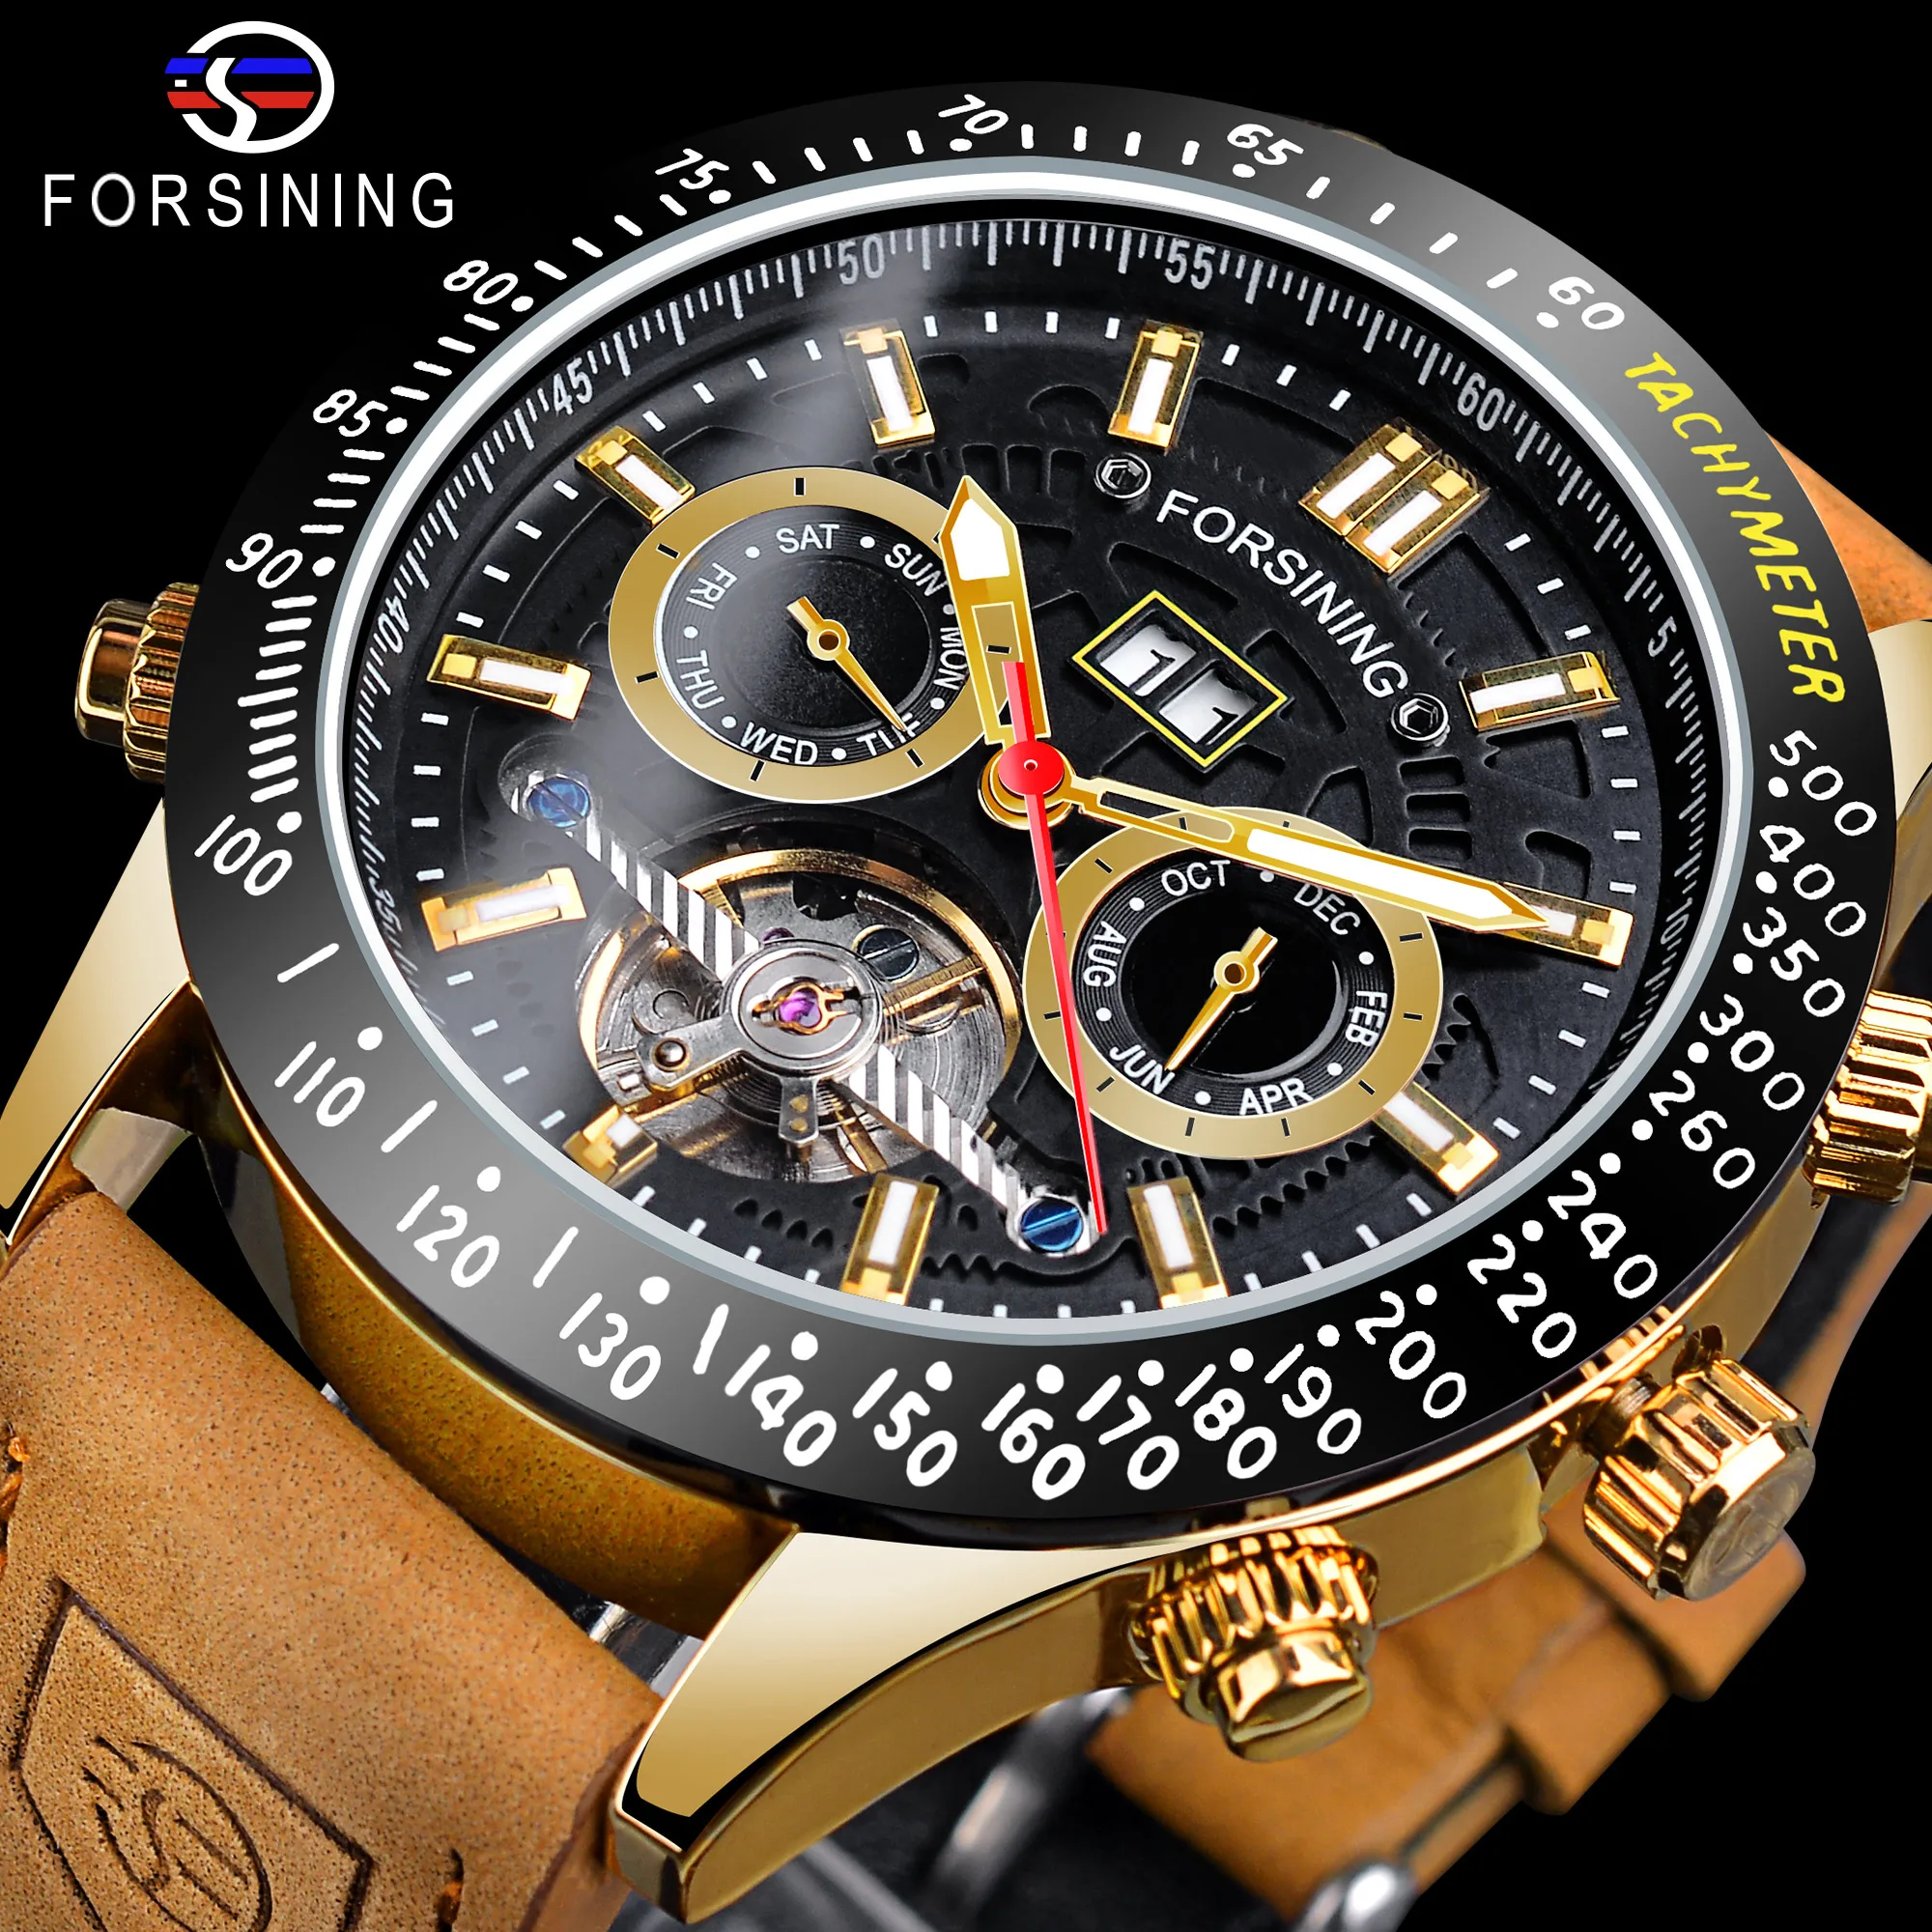 

Forsining Luxury Automatic Analog Watches Tourbillon Men Mechanical Watch Waterproof Wristwatch With Lluminous Hands Reloj